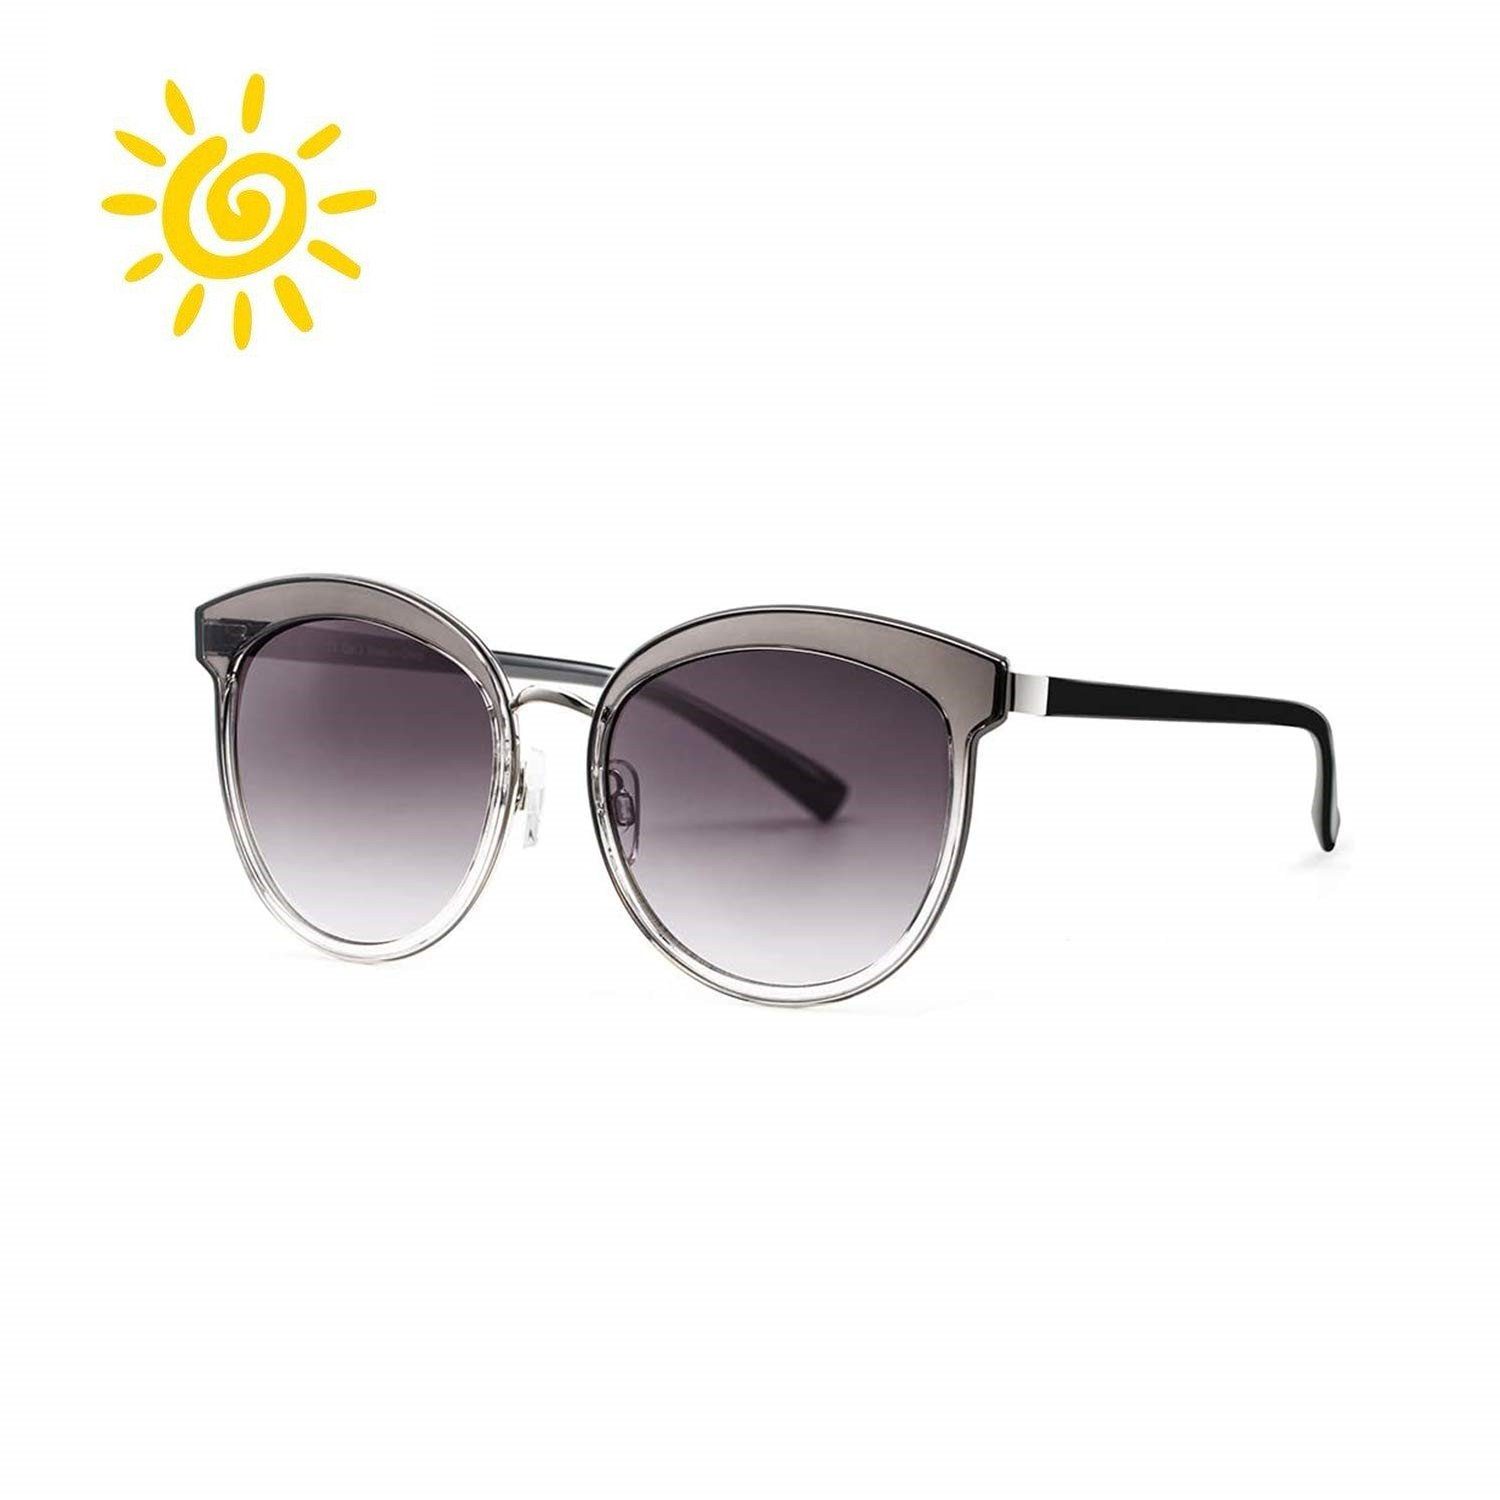 Avoalre Sonnenbrille »Avoalre Sonnenbrille Damen Sunglasses 100%  UV400-Schutz Sonnenbrille Damen Grau Sunglasses« online kaufen | OTTO